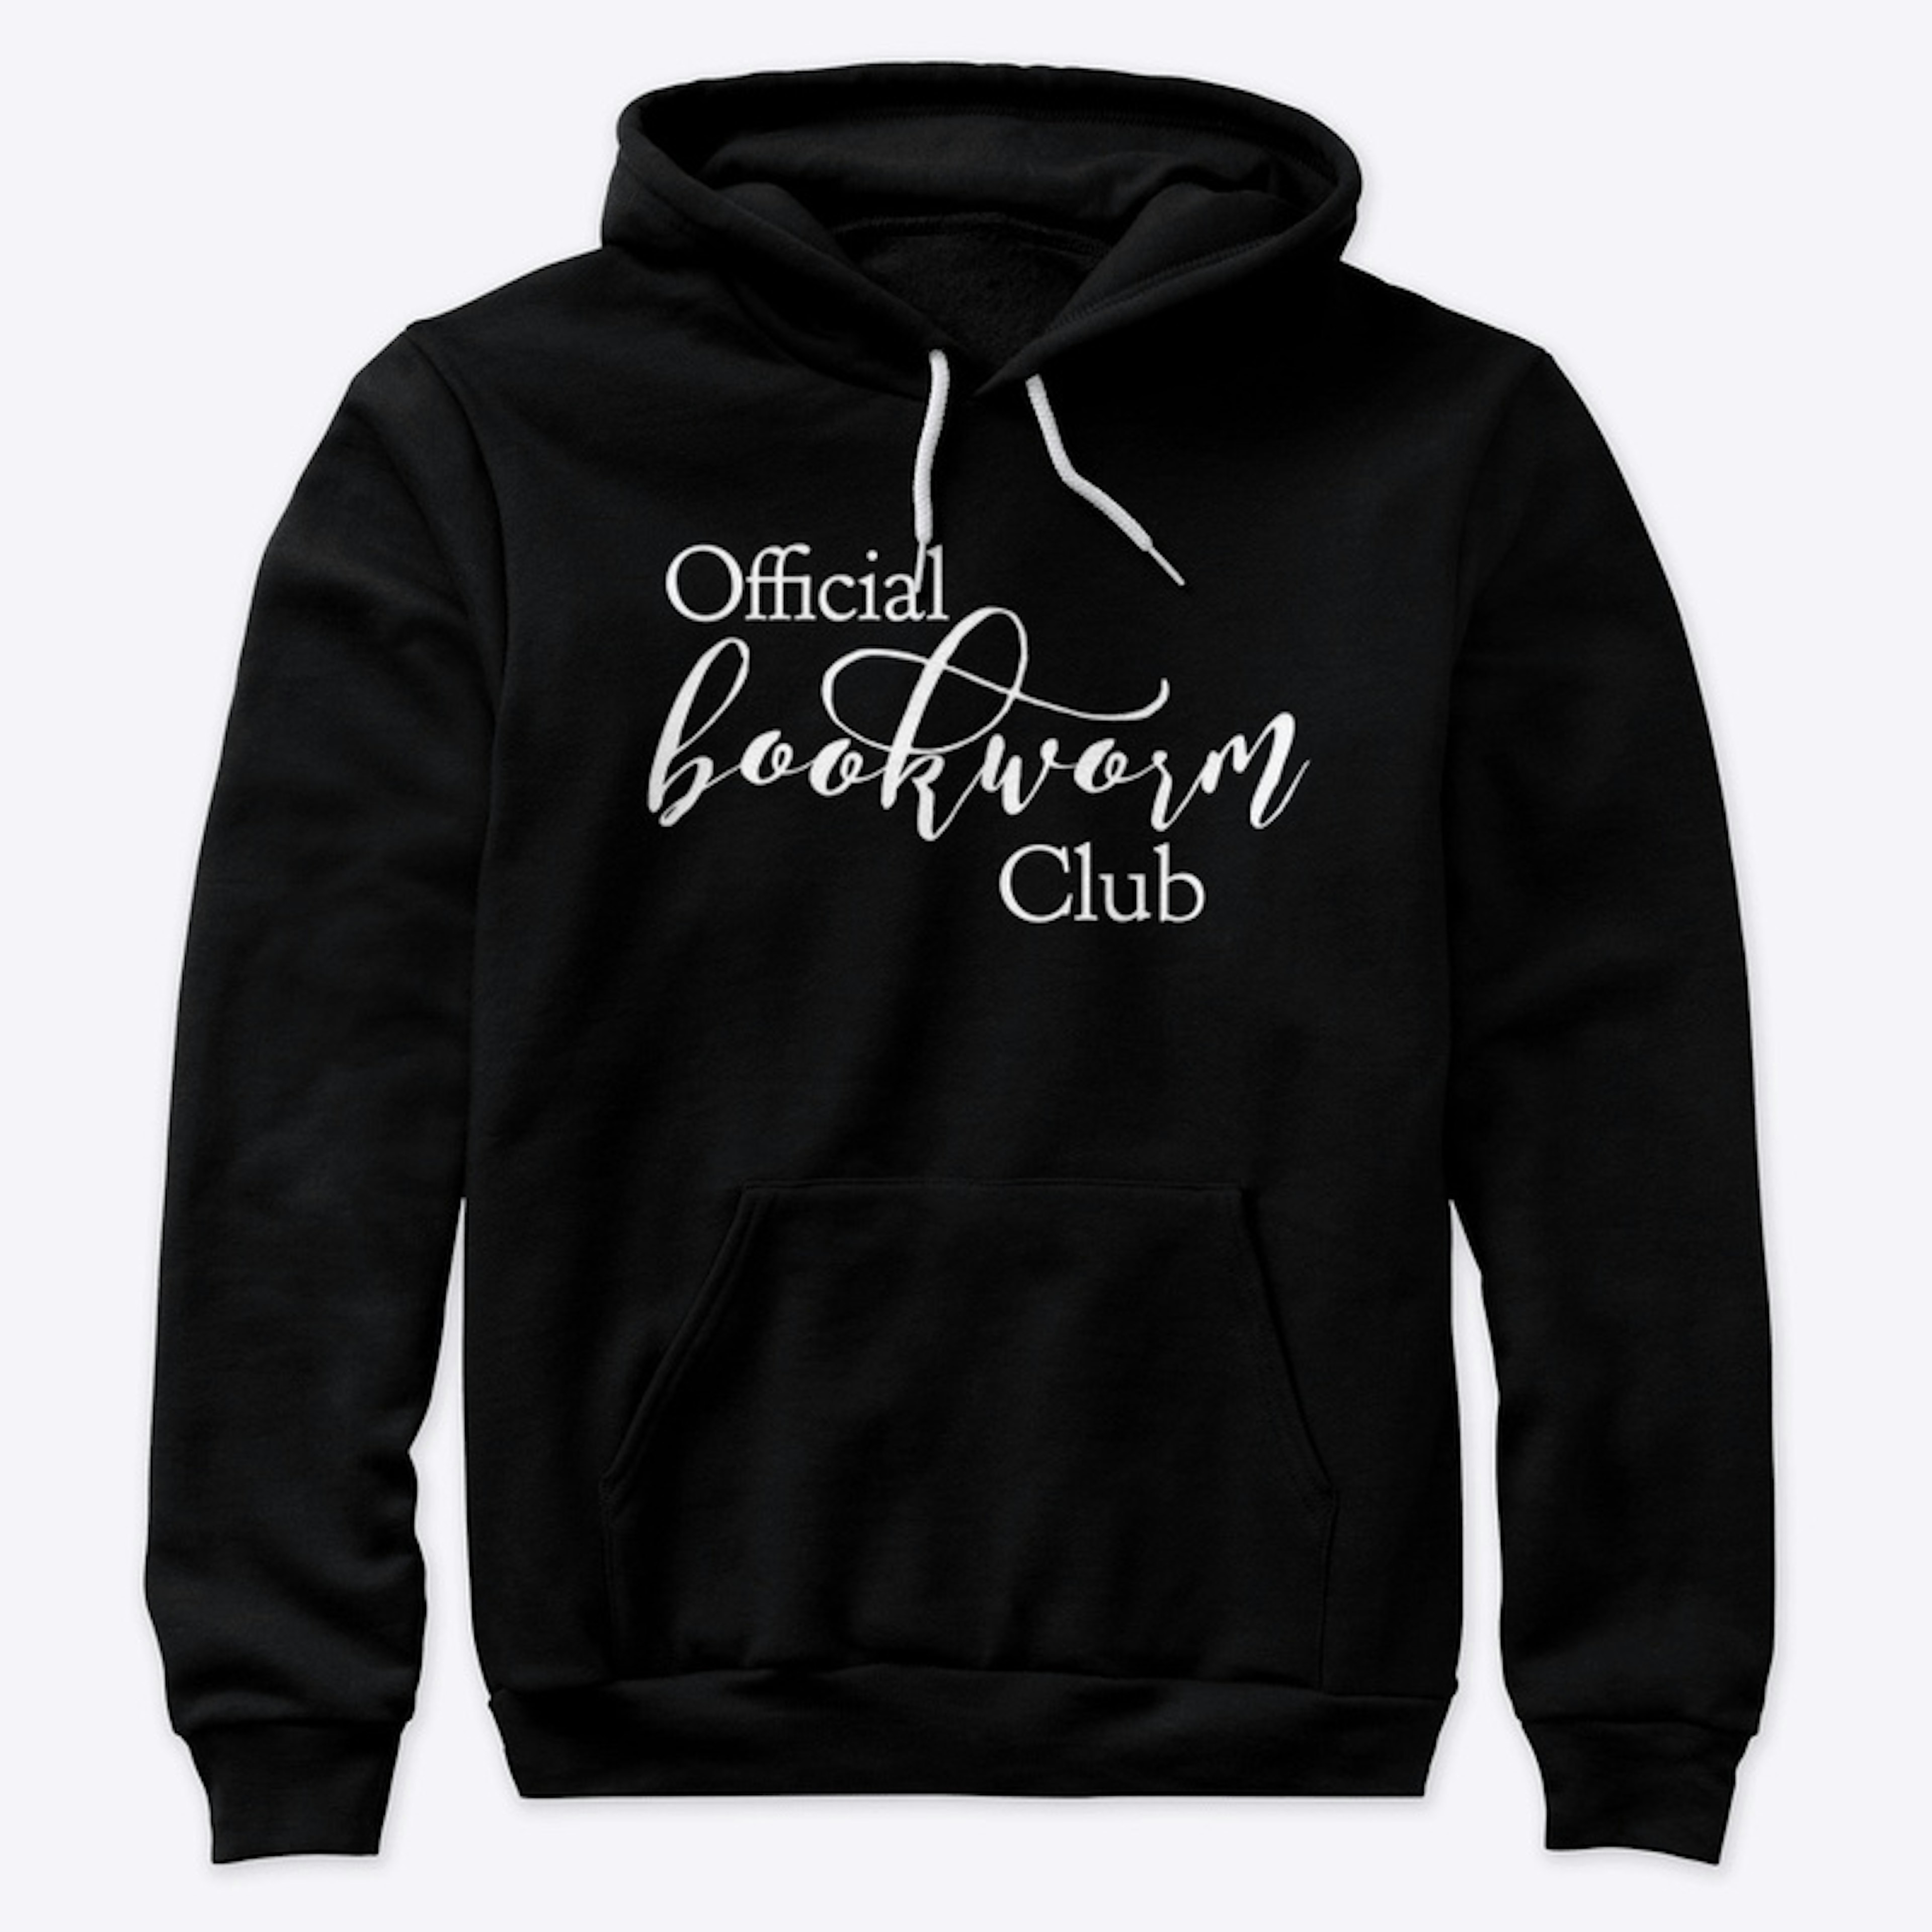 Official Bookworm Club